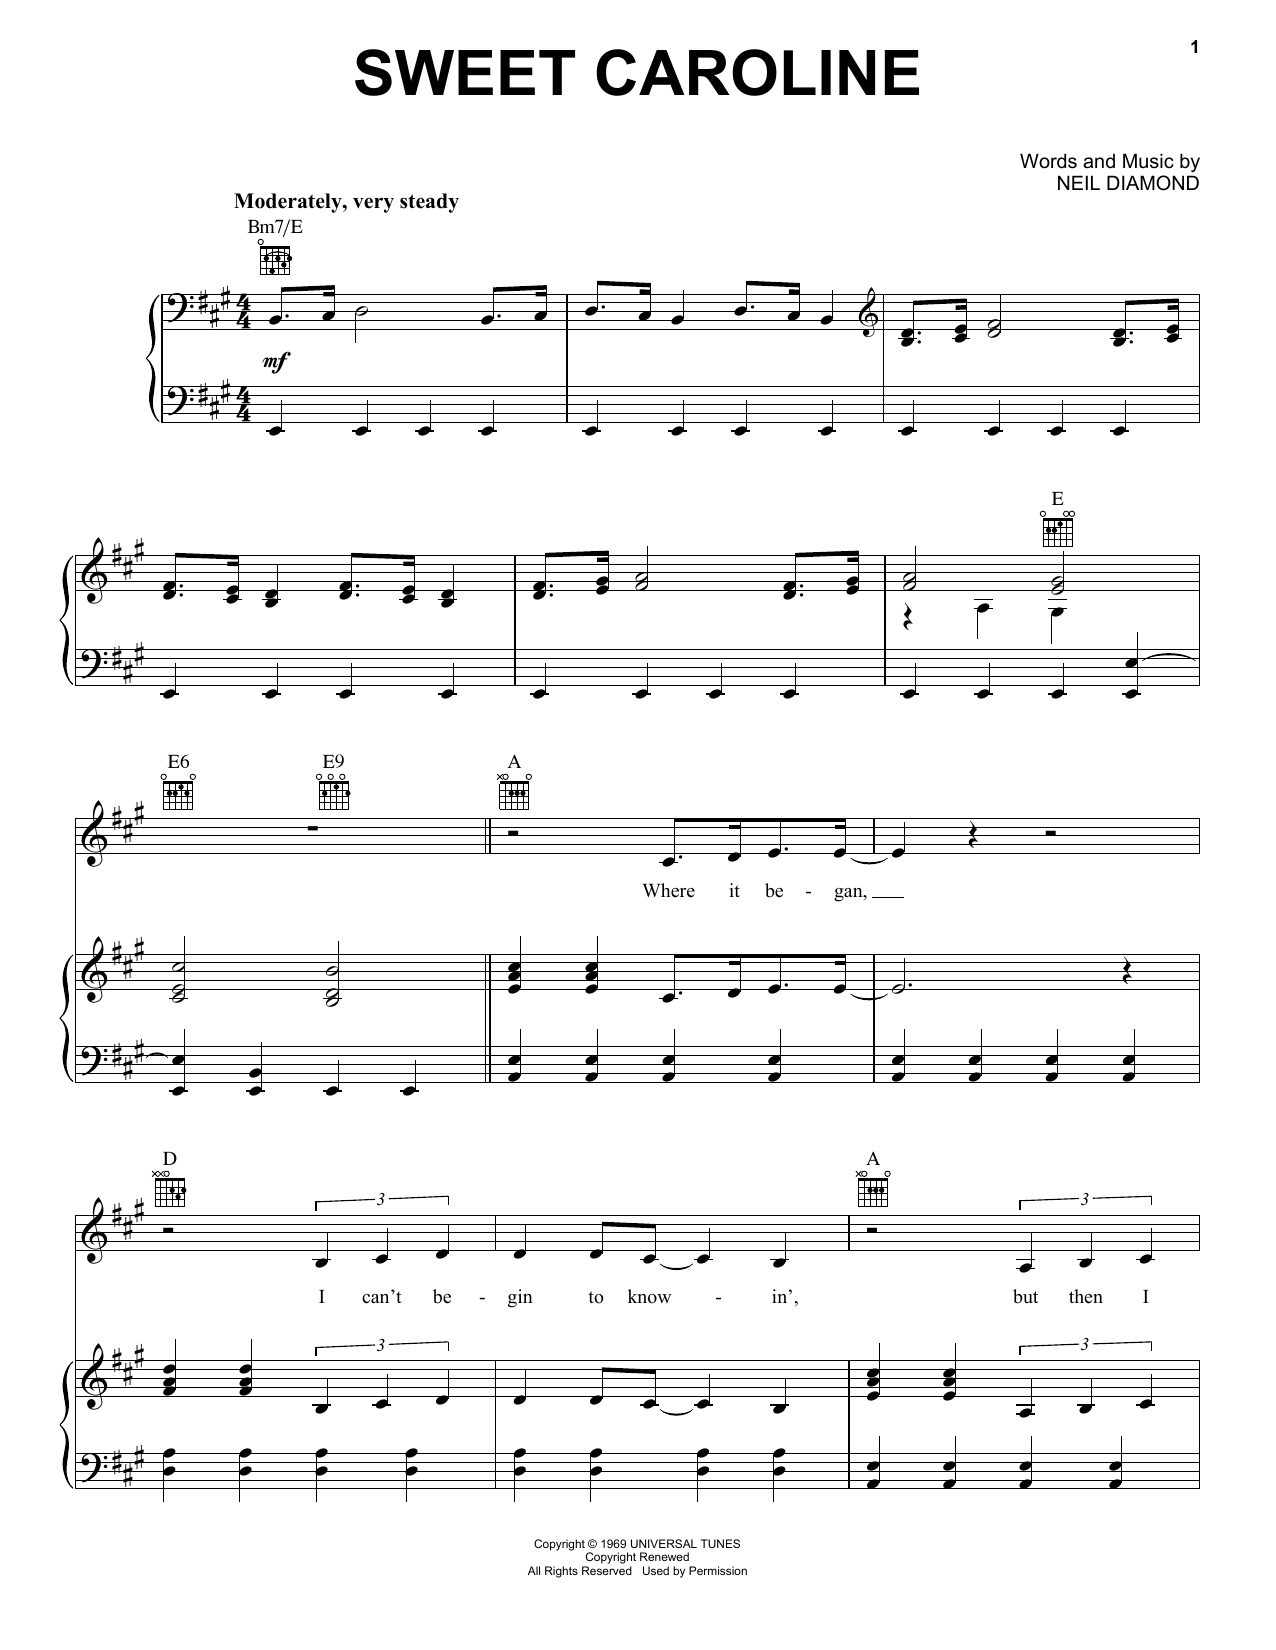 Neil Diamond Sweet Caroline Sheet Music Notes & Chords for Alto Saxophone - Download or Print PDF